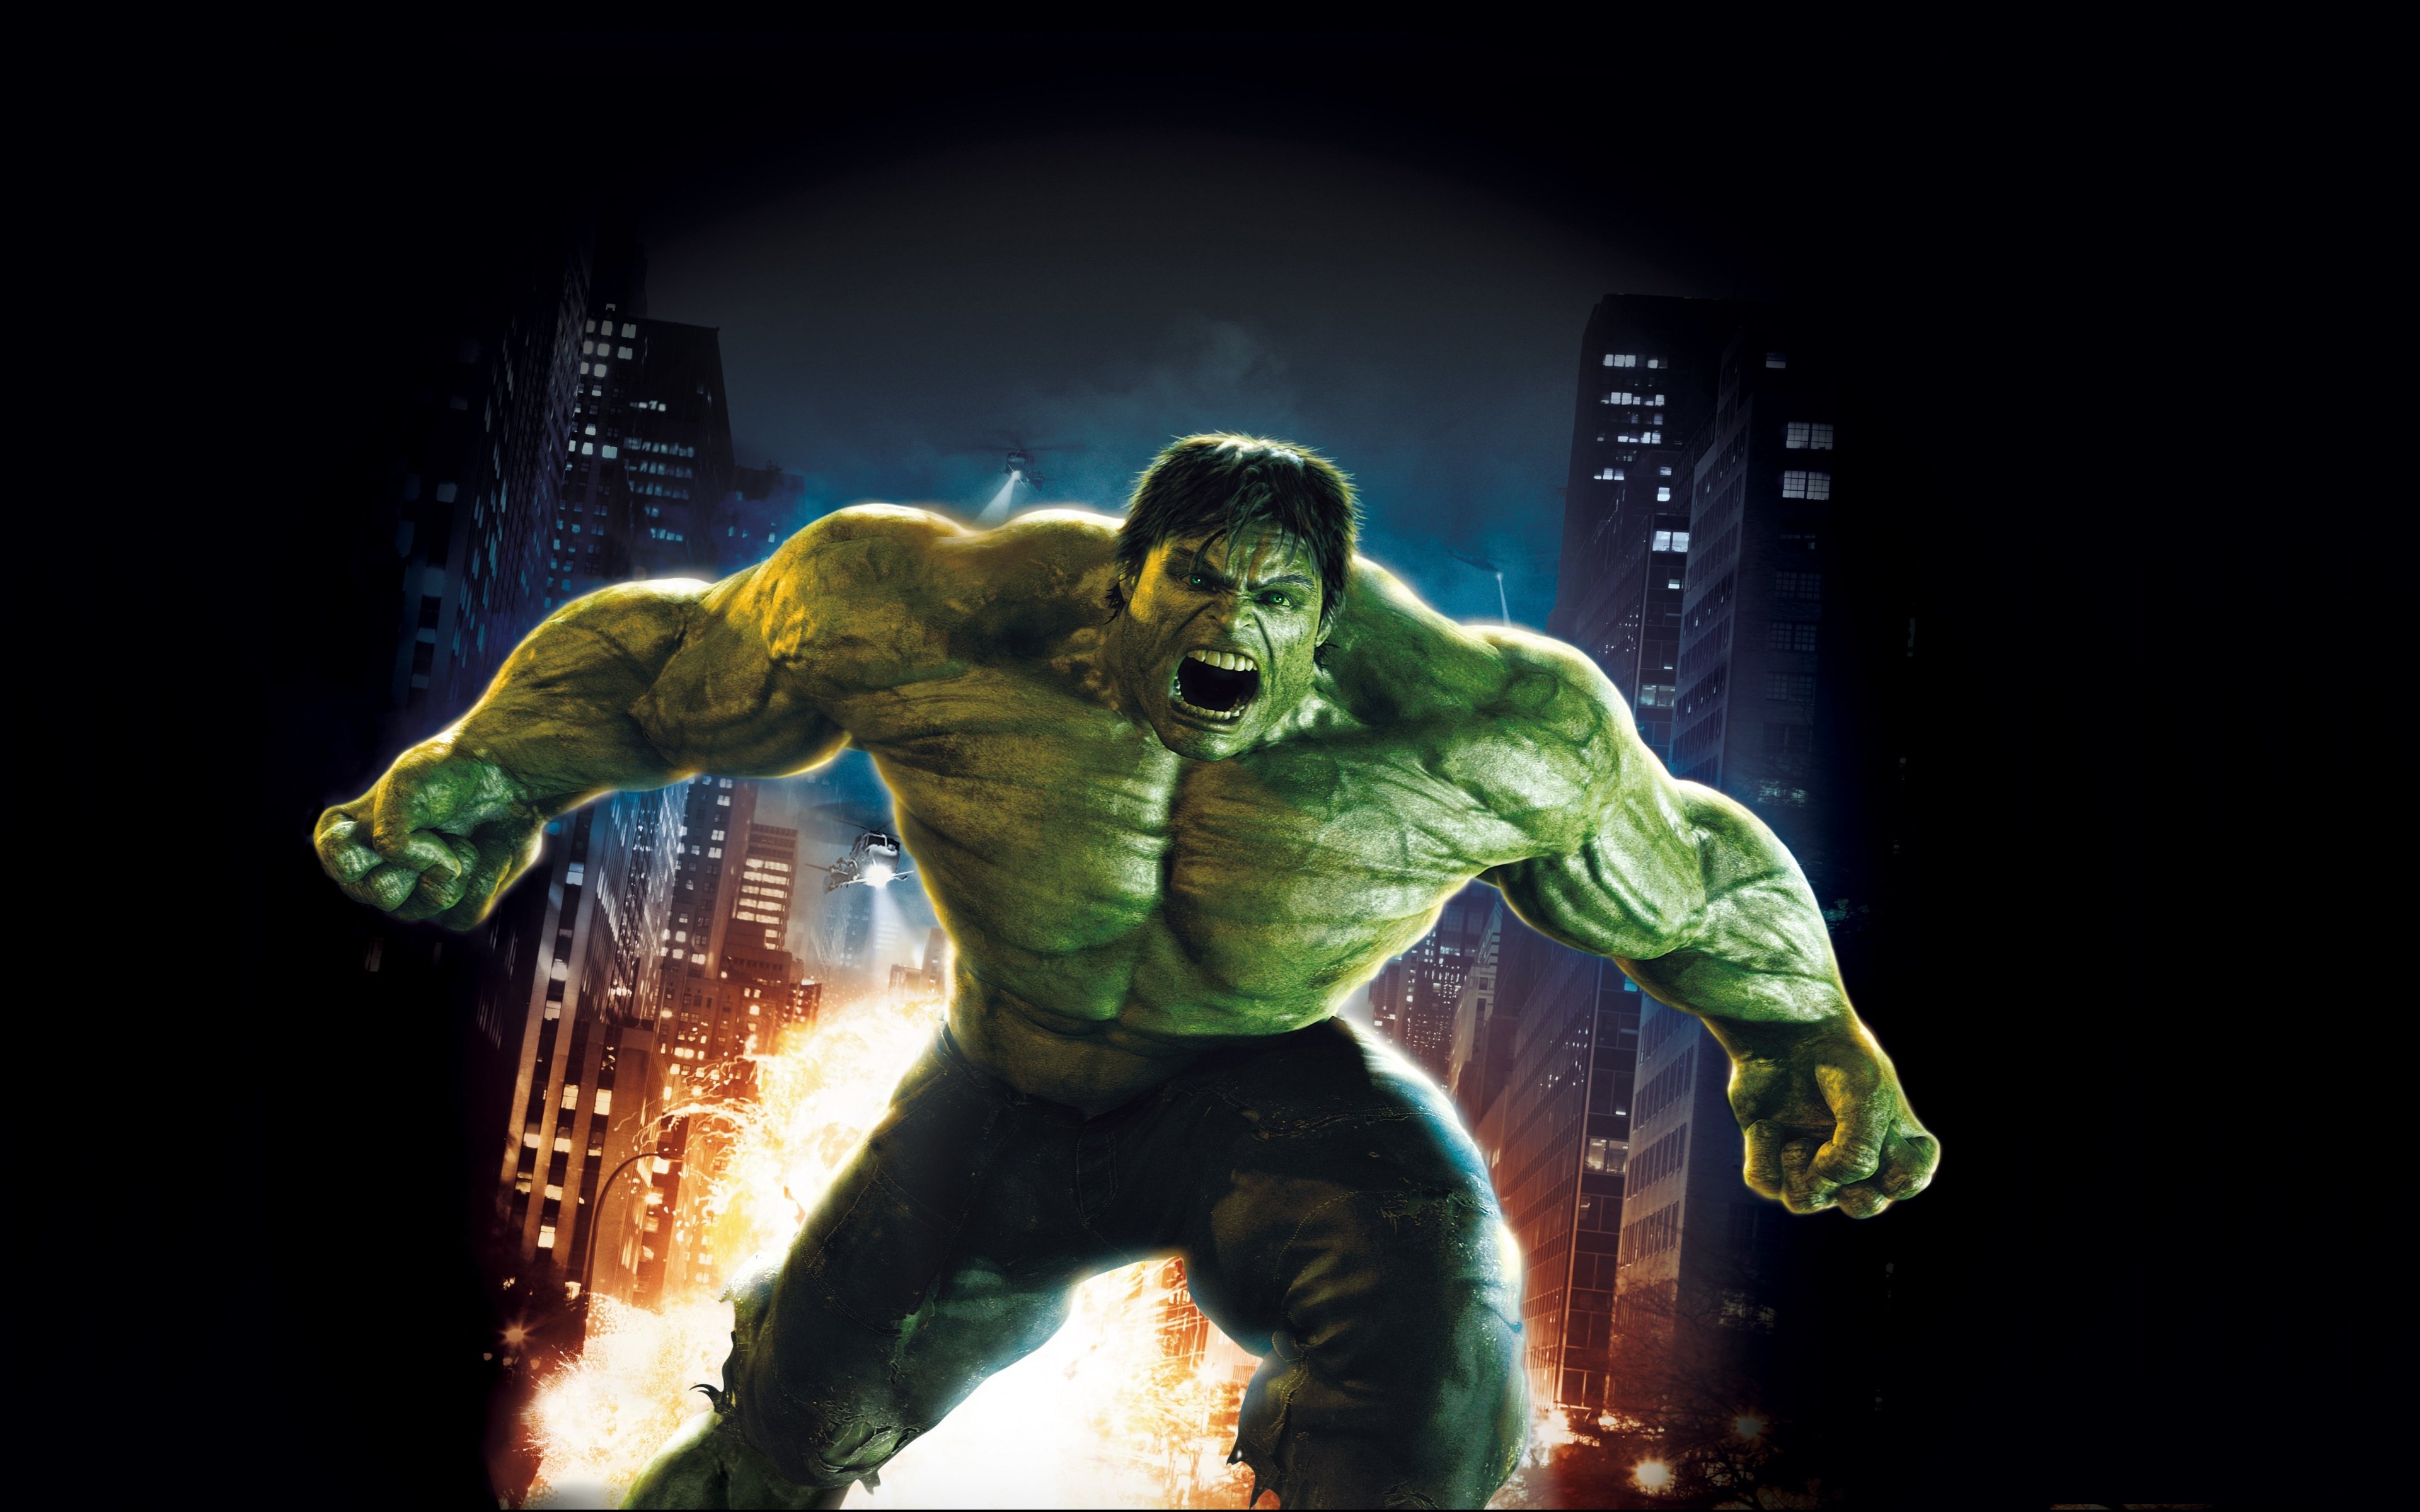 Download 3840x2400 wallpaper the incredible hulk, superhero, movie